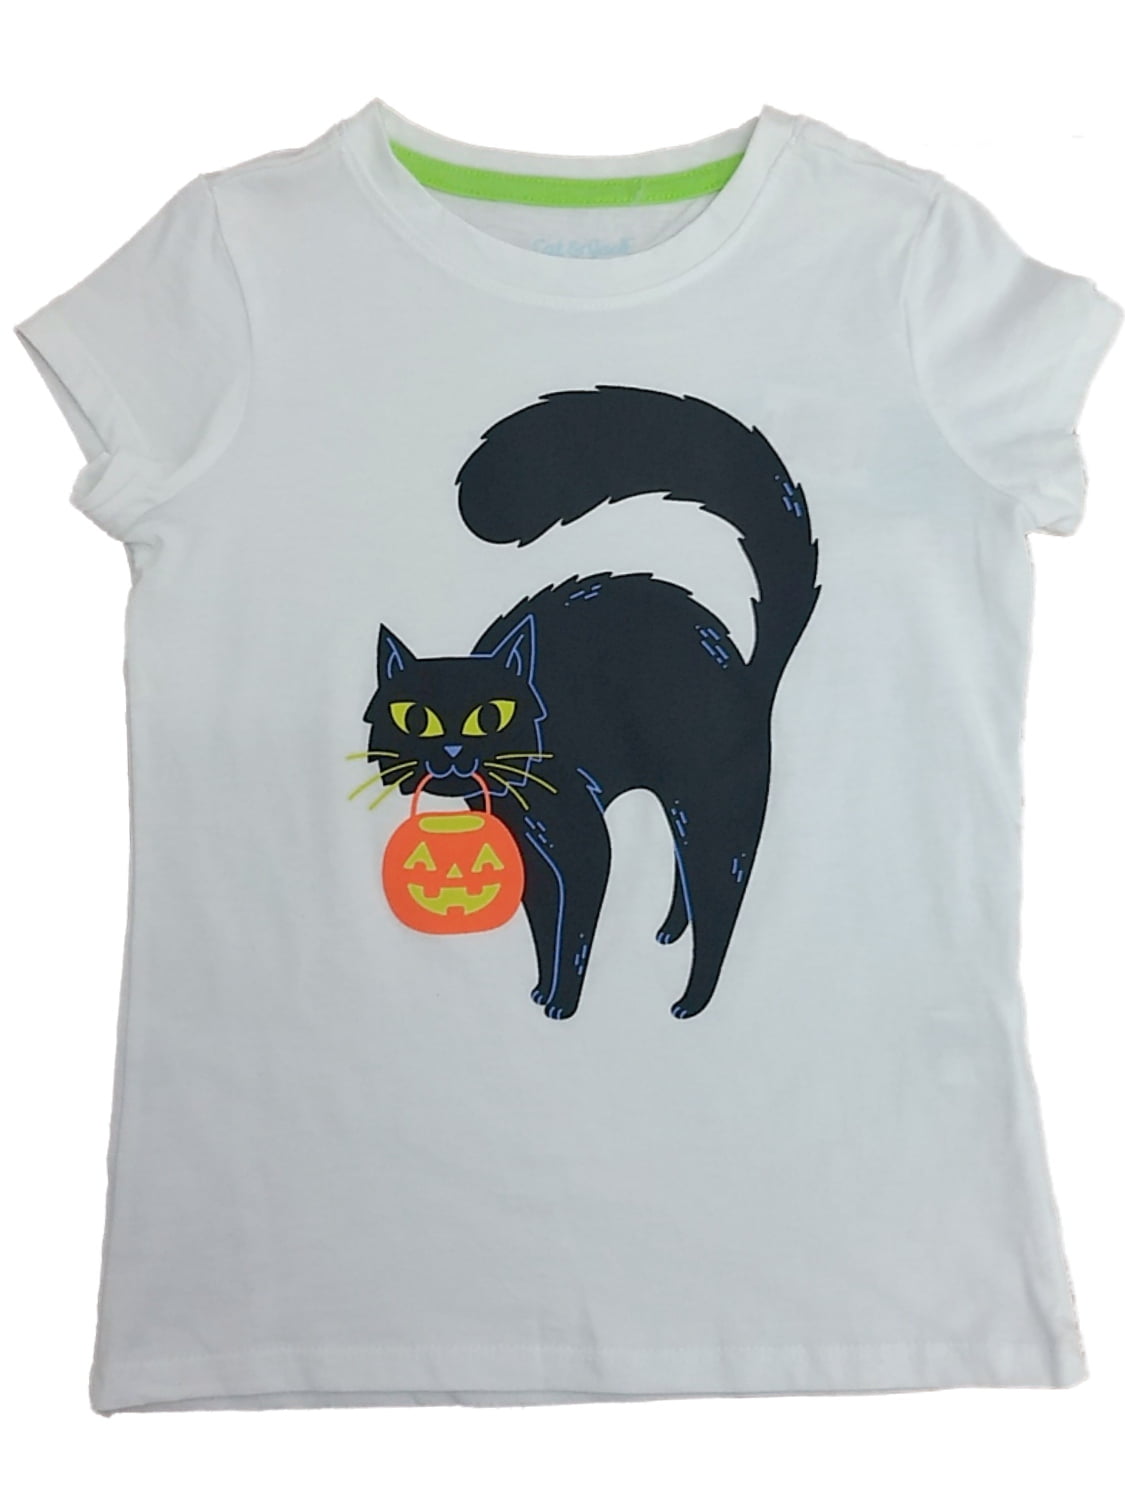 Cat & Jack Happy Halloween T-Shirt  White Pumpkin Top Girl Tee Shirt sz xs or s 